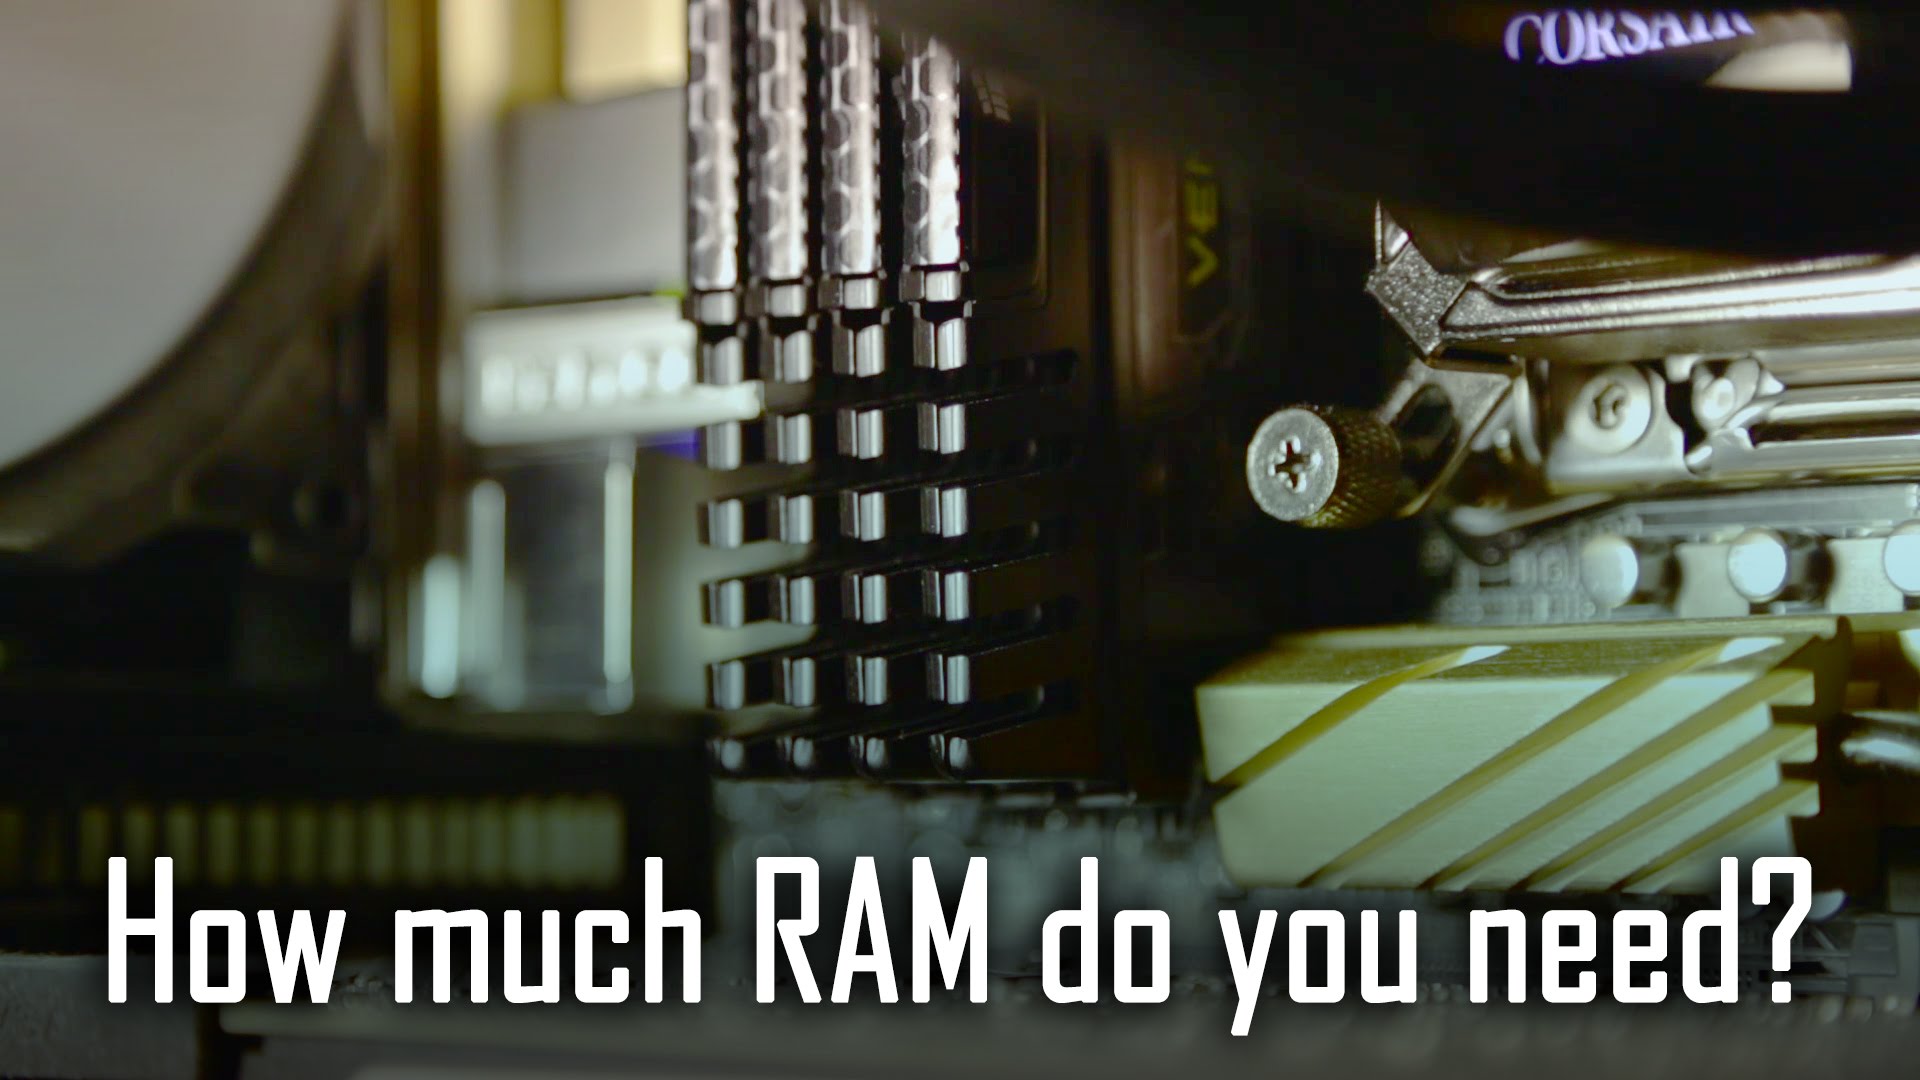 Not enough system memory. 64 GB Ram vs 32.